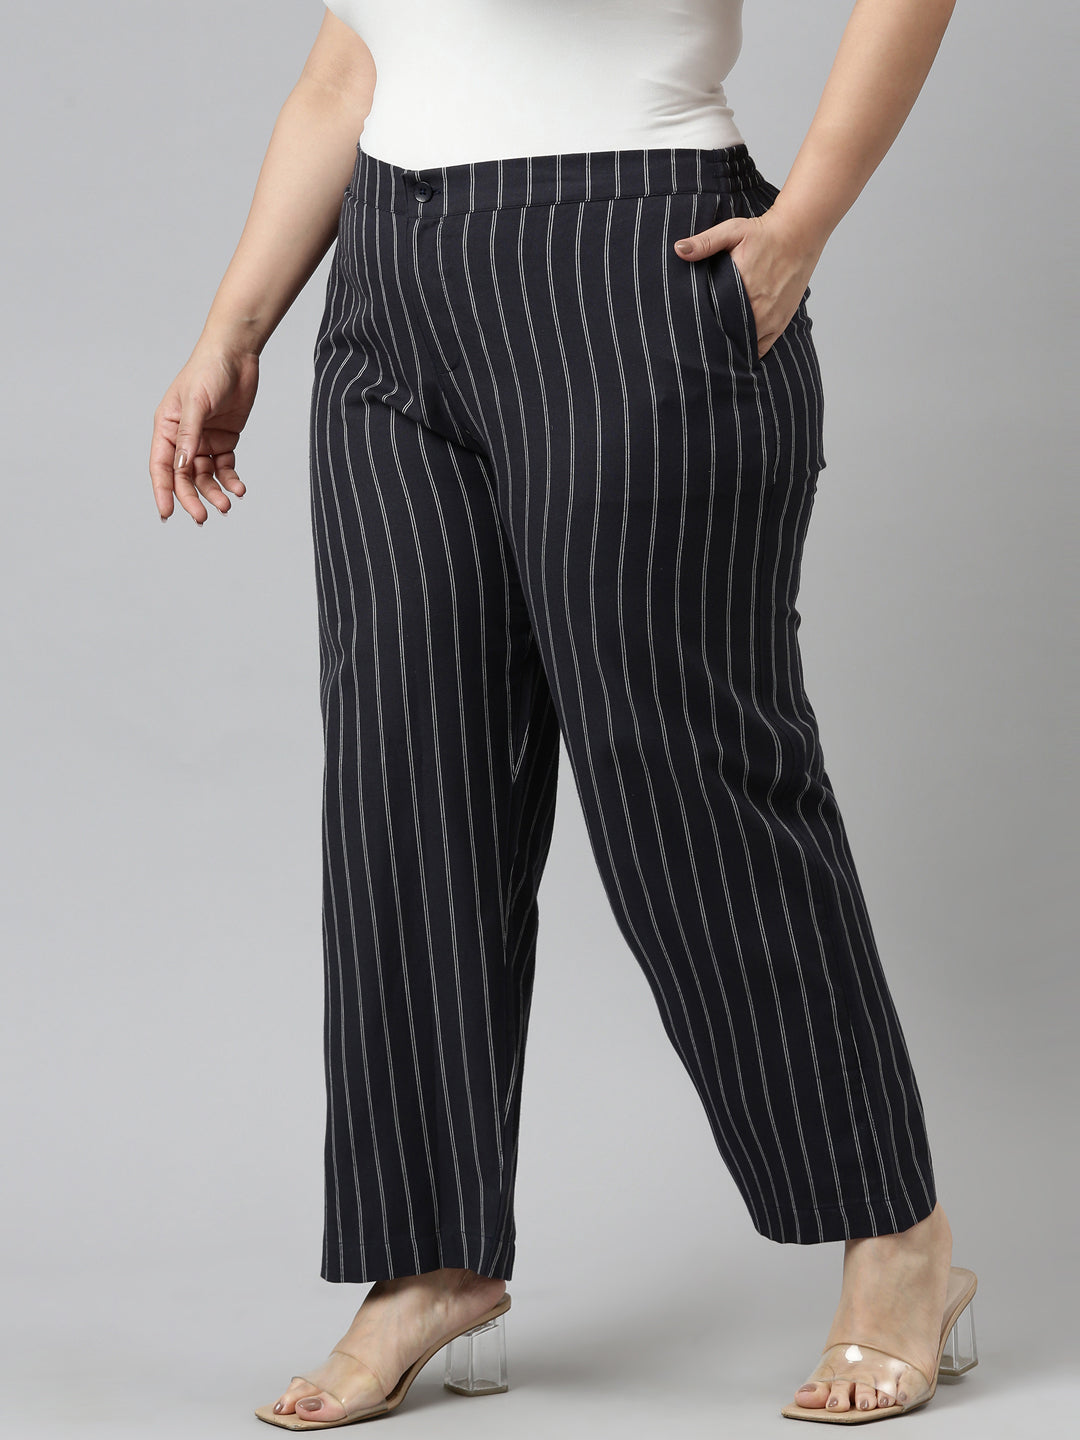 Women's Vertical Striped Pants